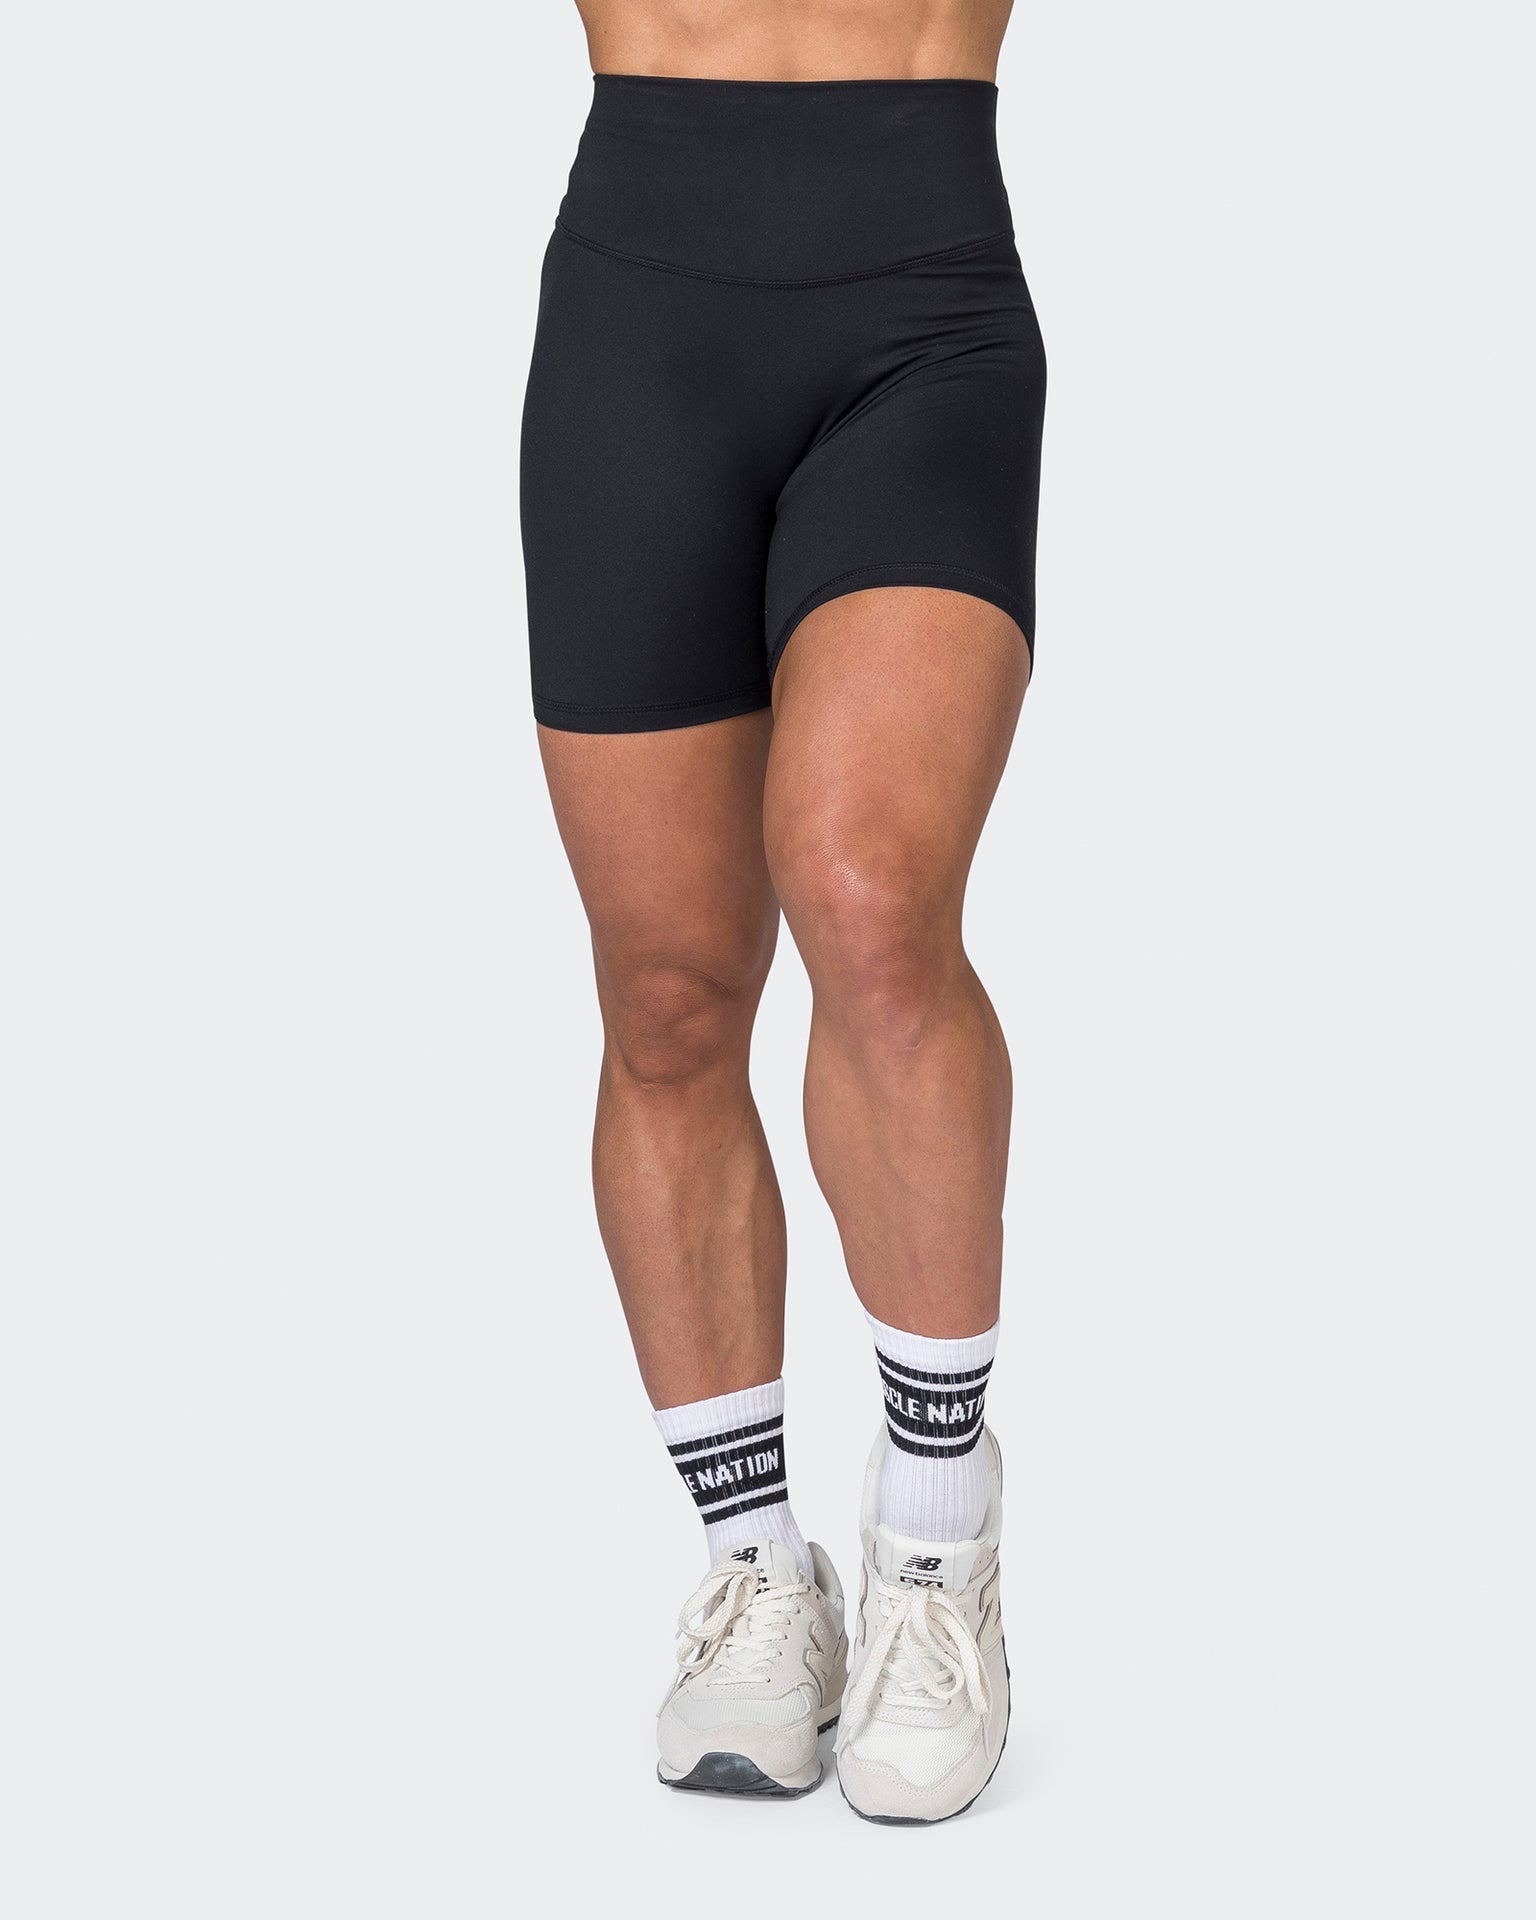 Muscle Nation Bike Shorts Ultra Signature Bike Shorts - Black